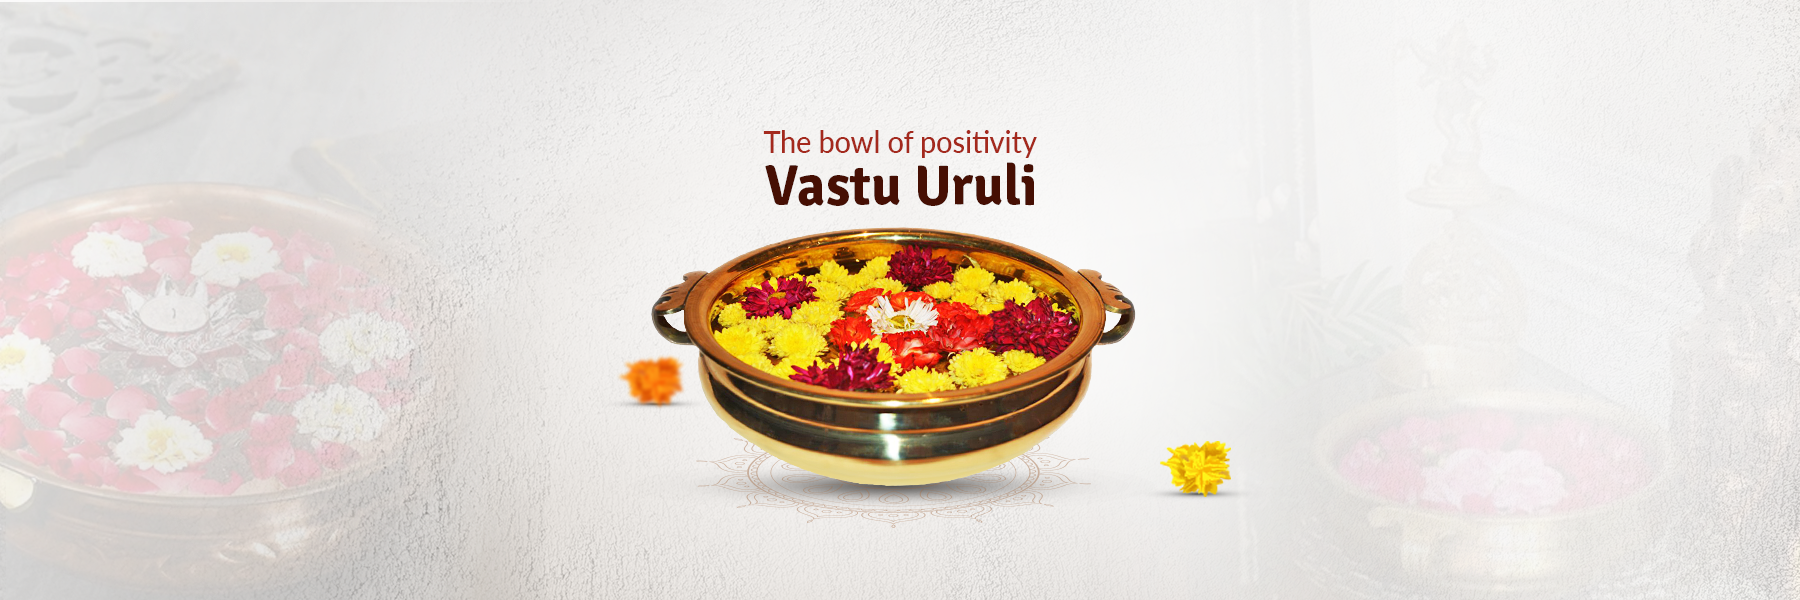 The Bowl of Positivity: Vasthu Uruli FromIndia.com